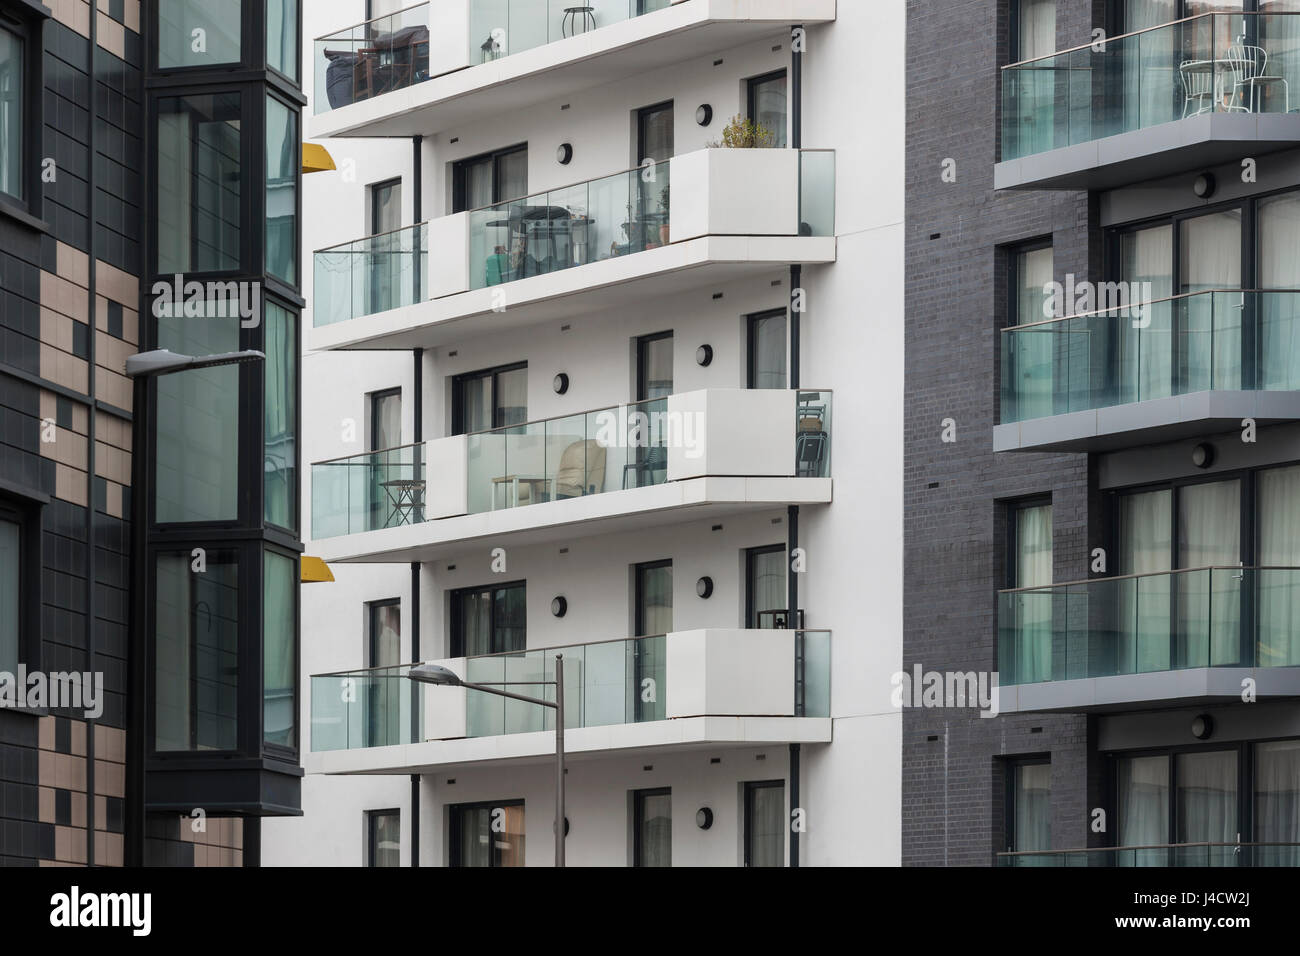 Balconies on a modern apartment block. Stock Photo